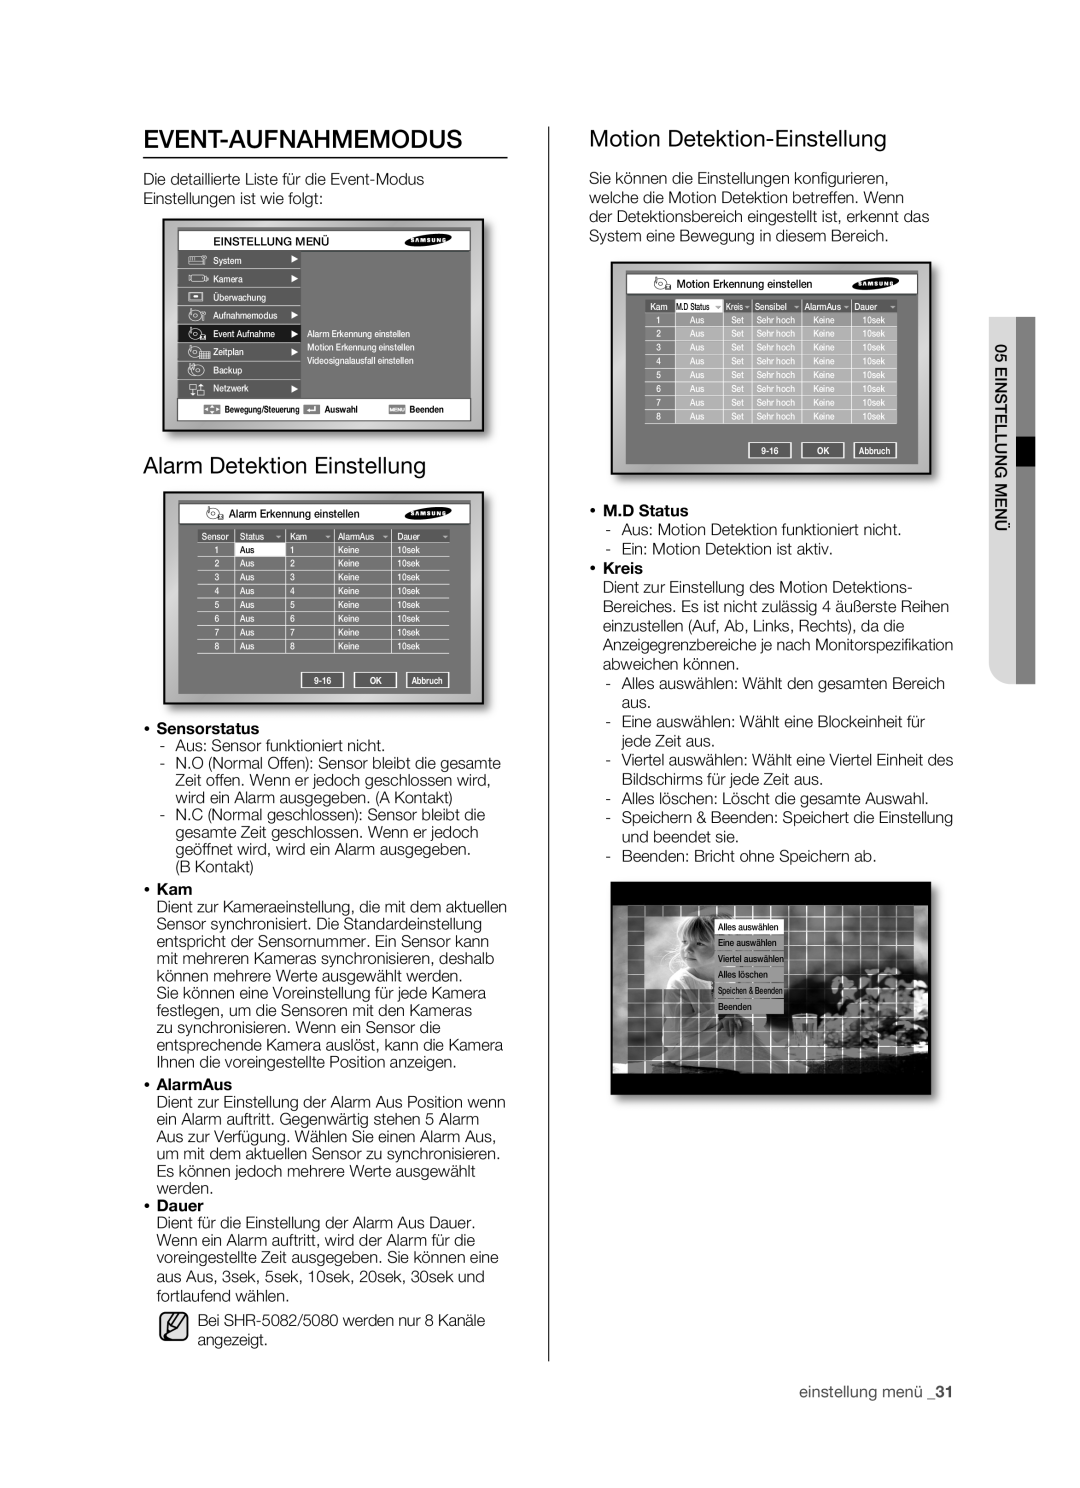 Samsung SHR-5082P Event-Aufnahmemodus, Alarm Detektion Einstellung, Motion Detektion-Einstellung,  Sensorstatus,  Kam 